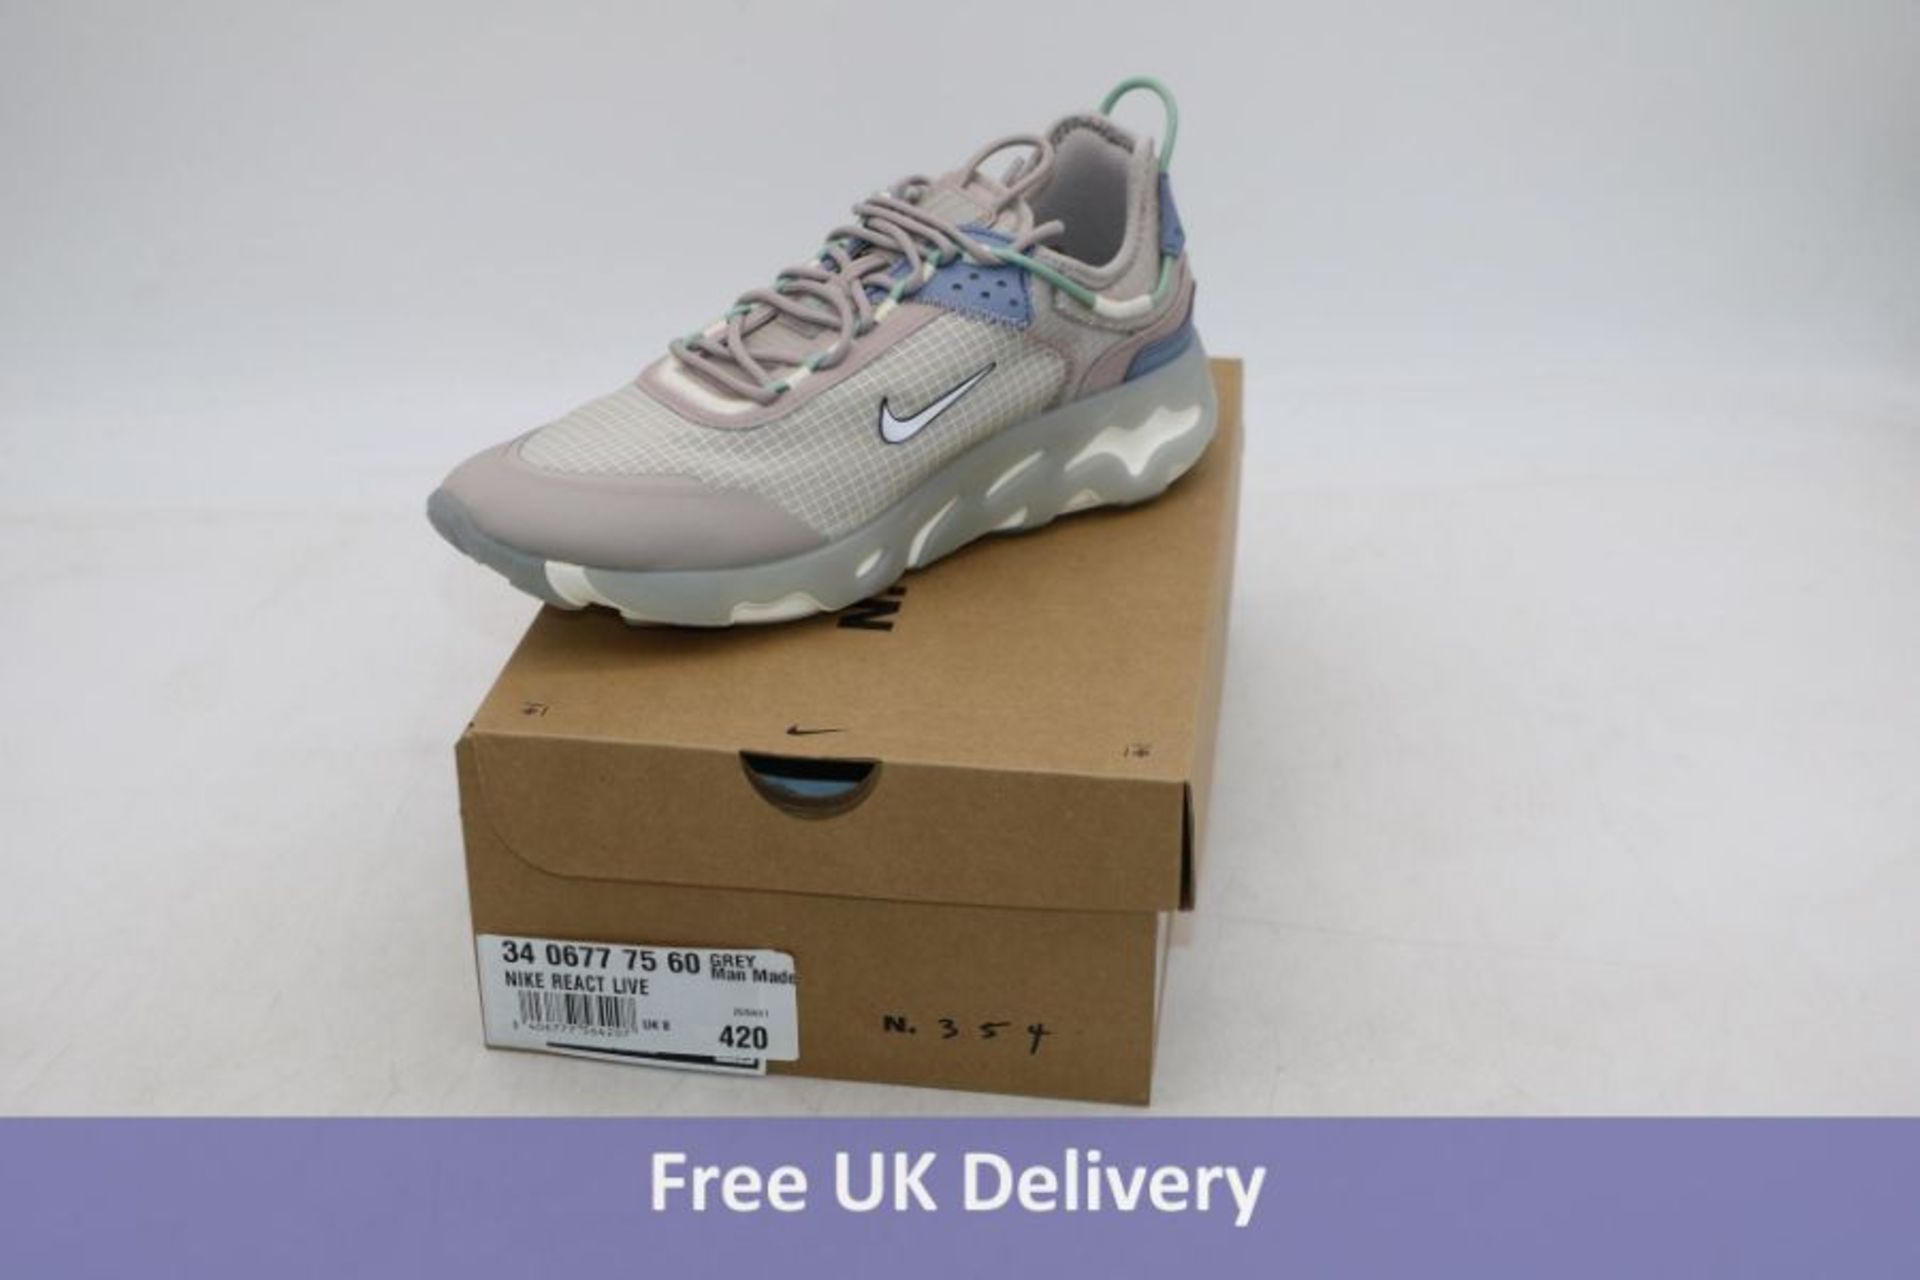 Nike React Live Men's Trainers, Grey, UK 10